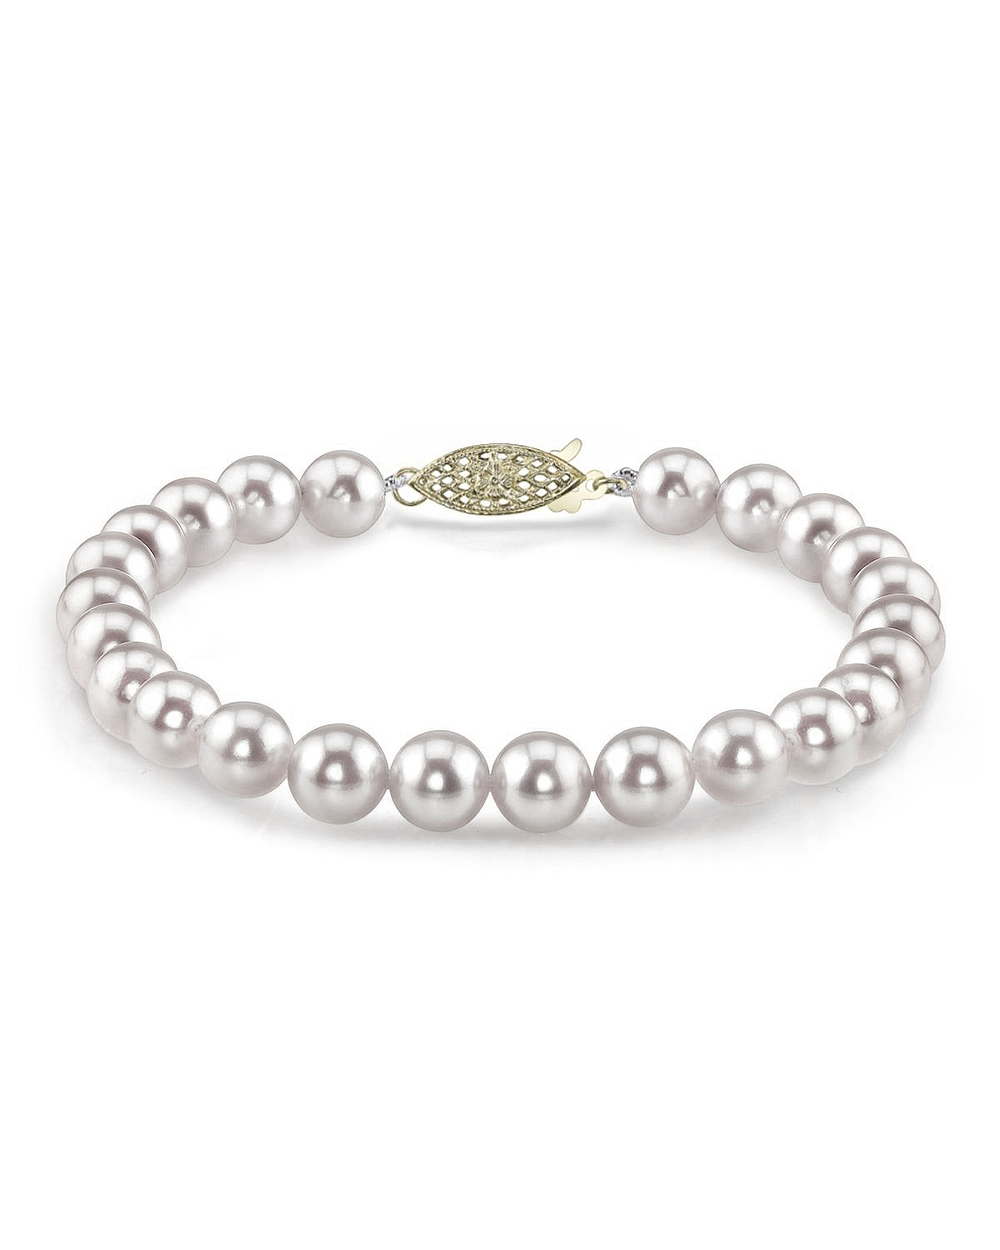 7.0-7.5mm akoya white pearl bracelet- choose your quality HNHQQAL